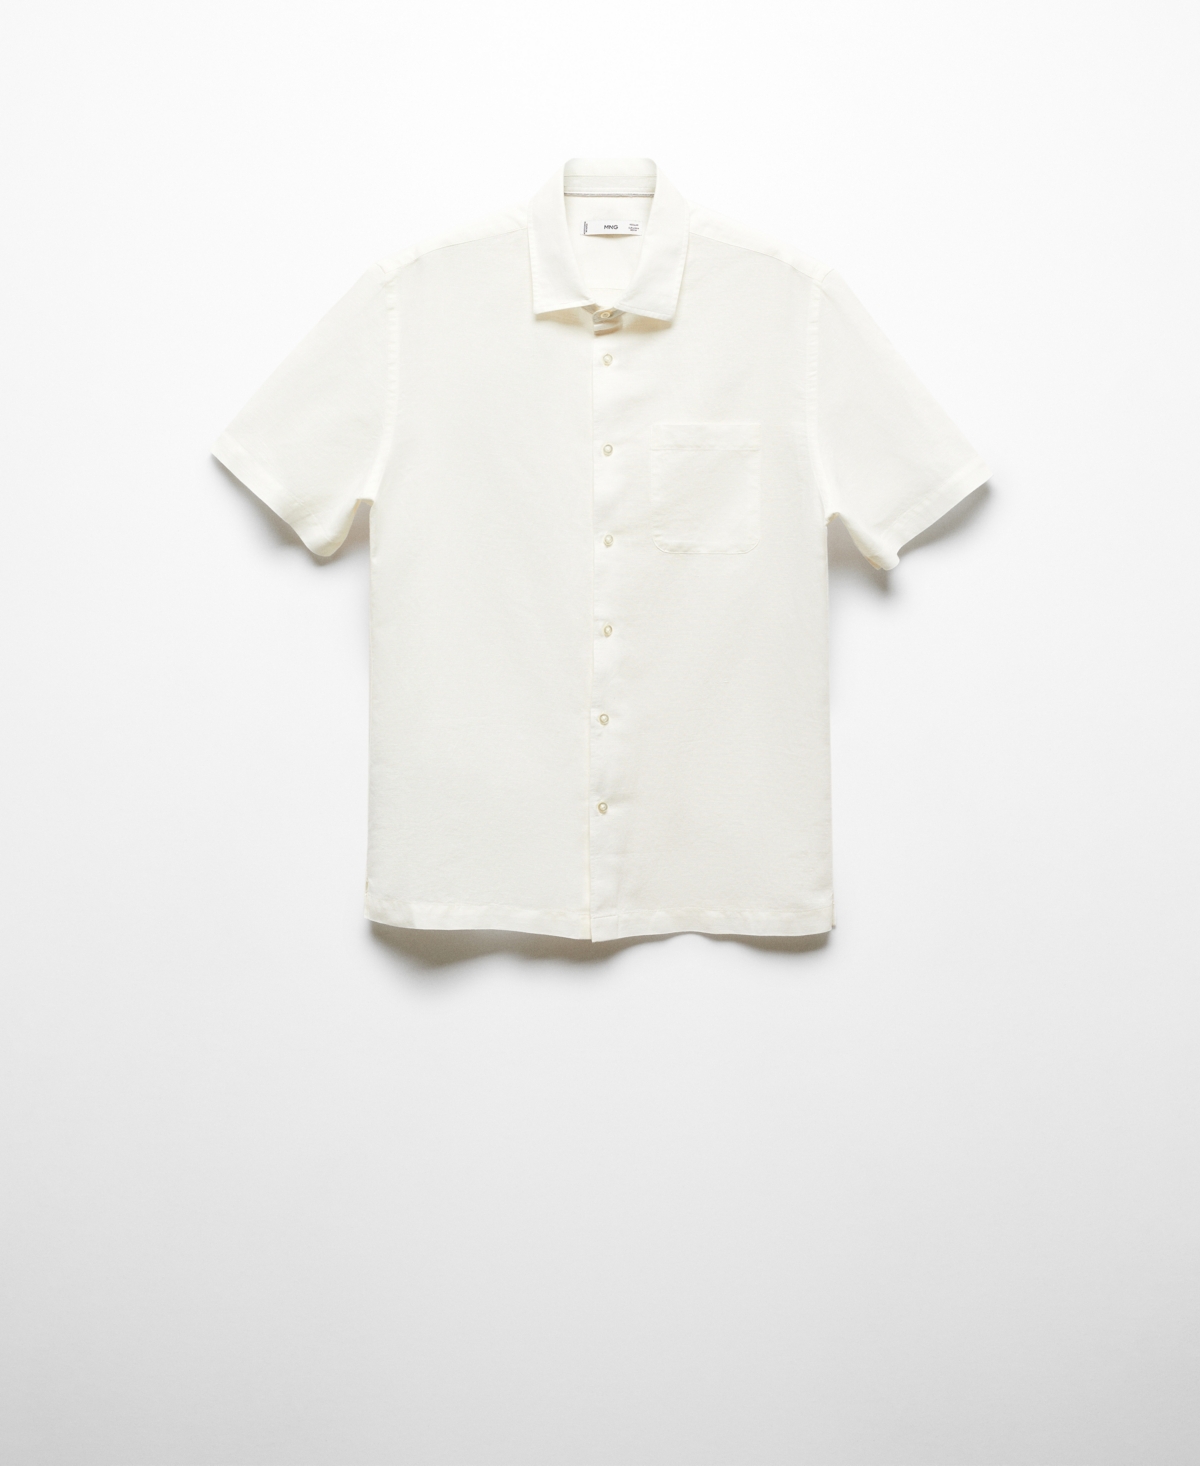 Shop Mango Men's Regular-fit Linen Short-sleeved Shirt In Khaki